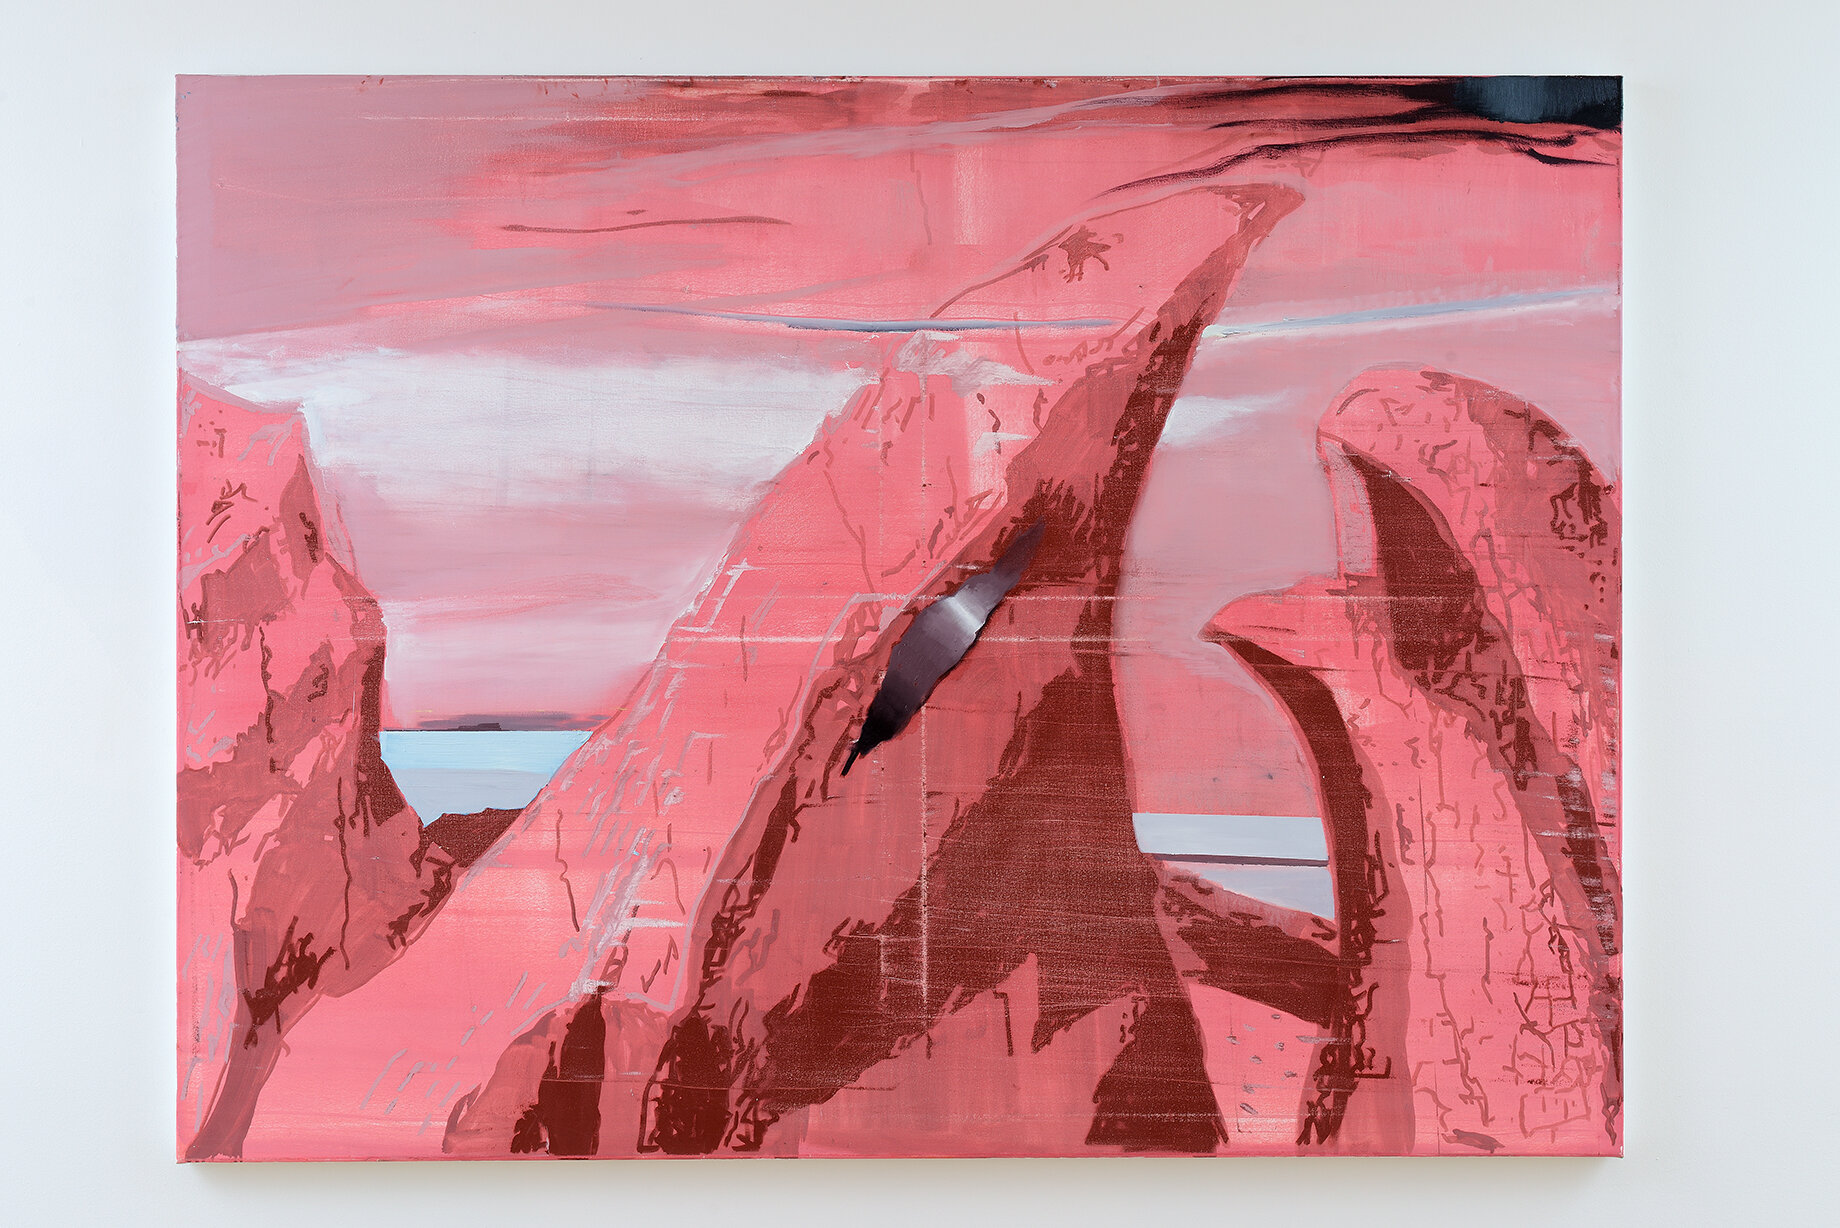   Curve , (2020), oil on canvas, 150x200 cm    